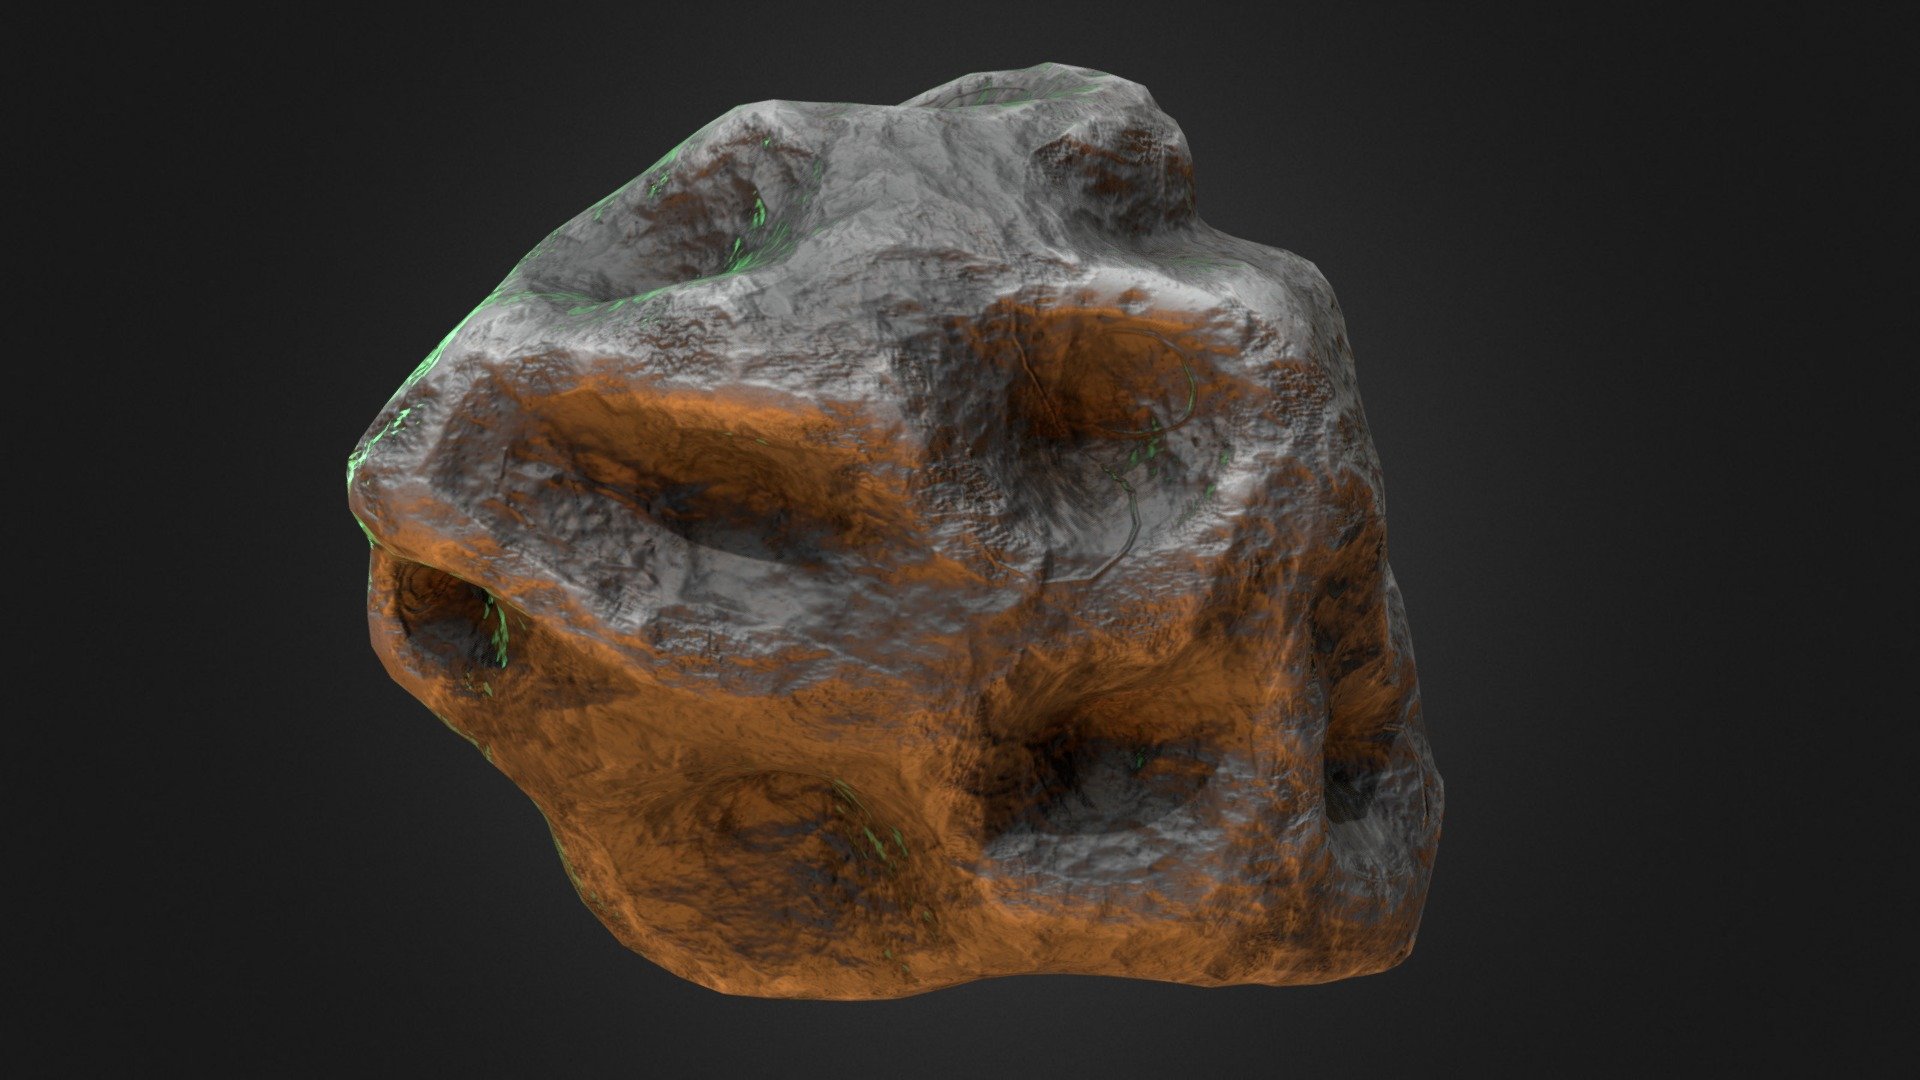 Sculpt - Blender 2.82
Retopo - 3DCoat
Texturing - 3DCoat
 - Meteorite - 3D model by Apofex (@Z_Kir) 3d model